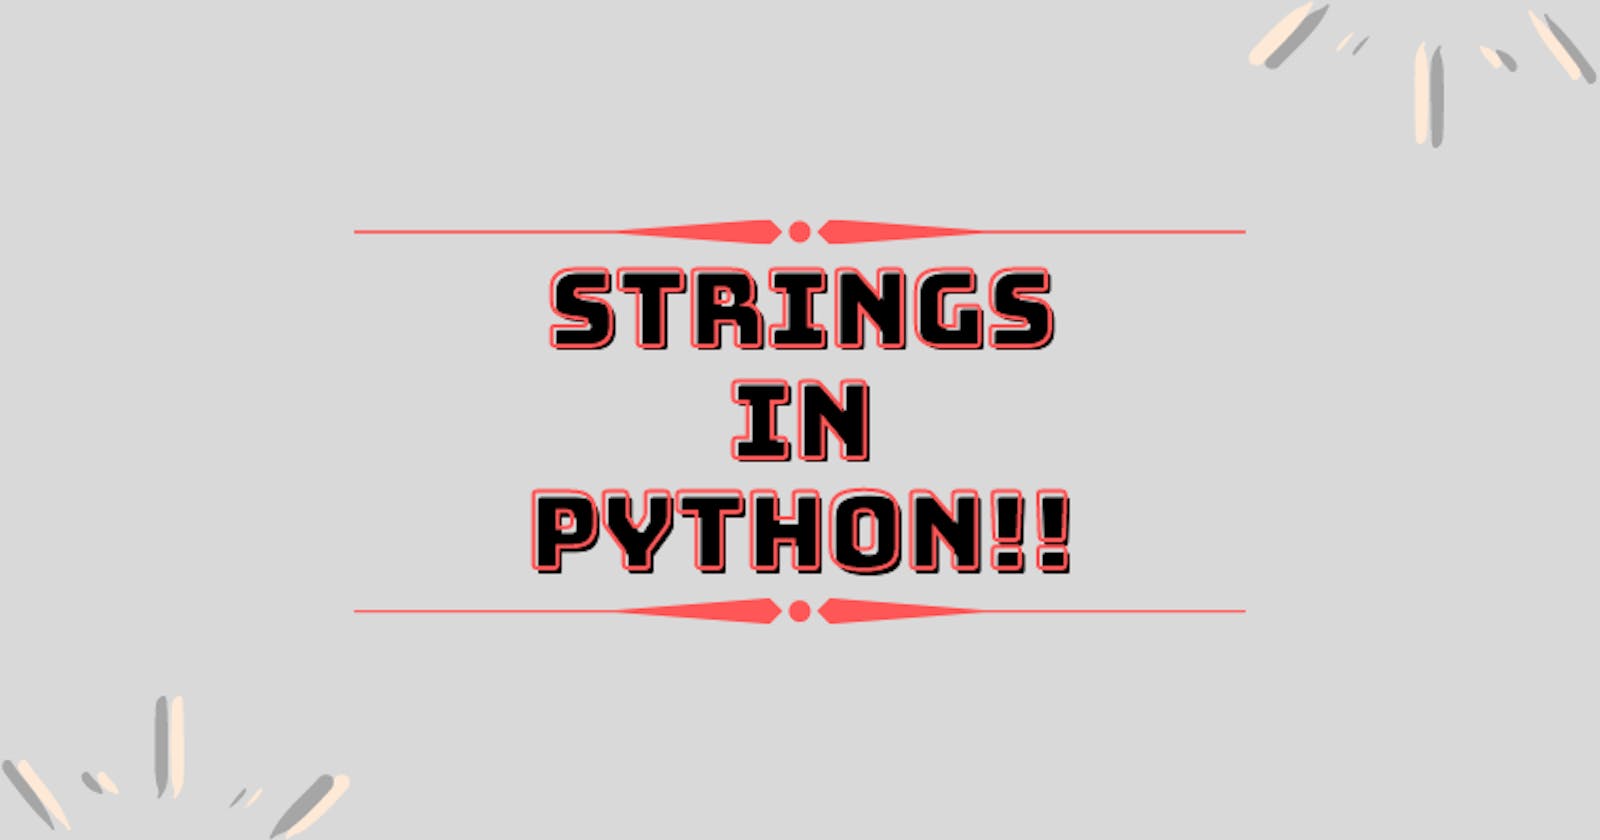 Strings in python